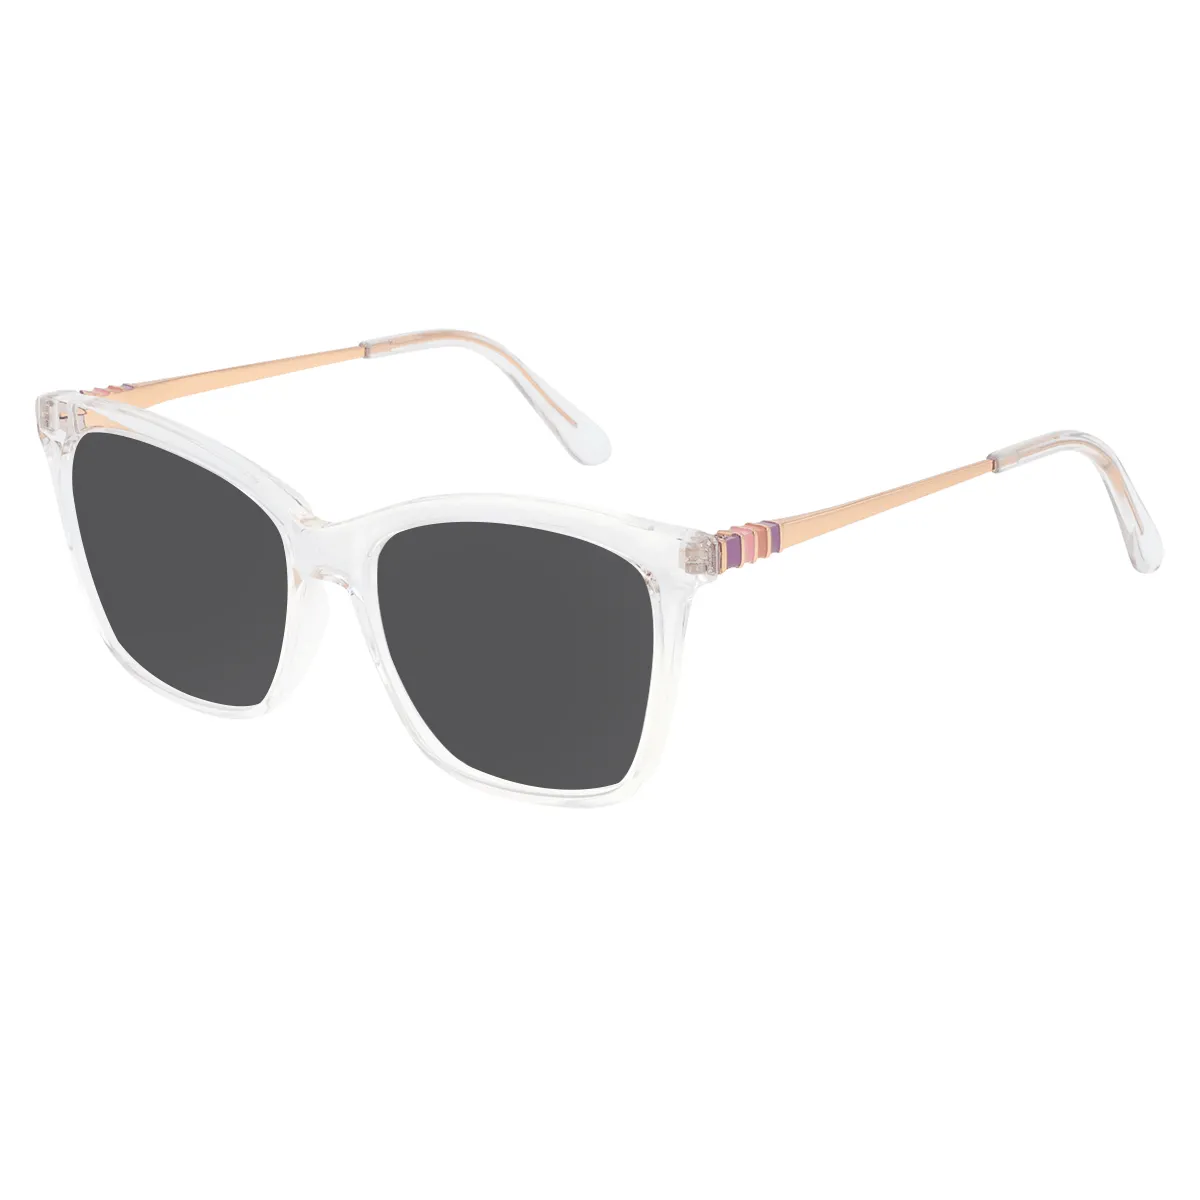 Asquith - Square Transparent Sunglasses for Men & Women